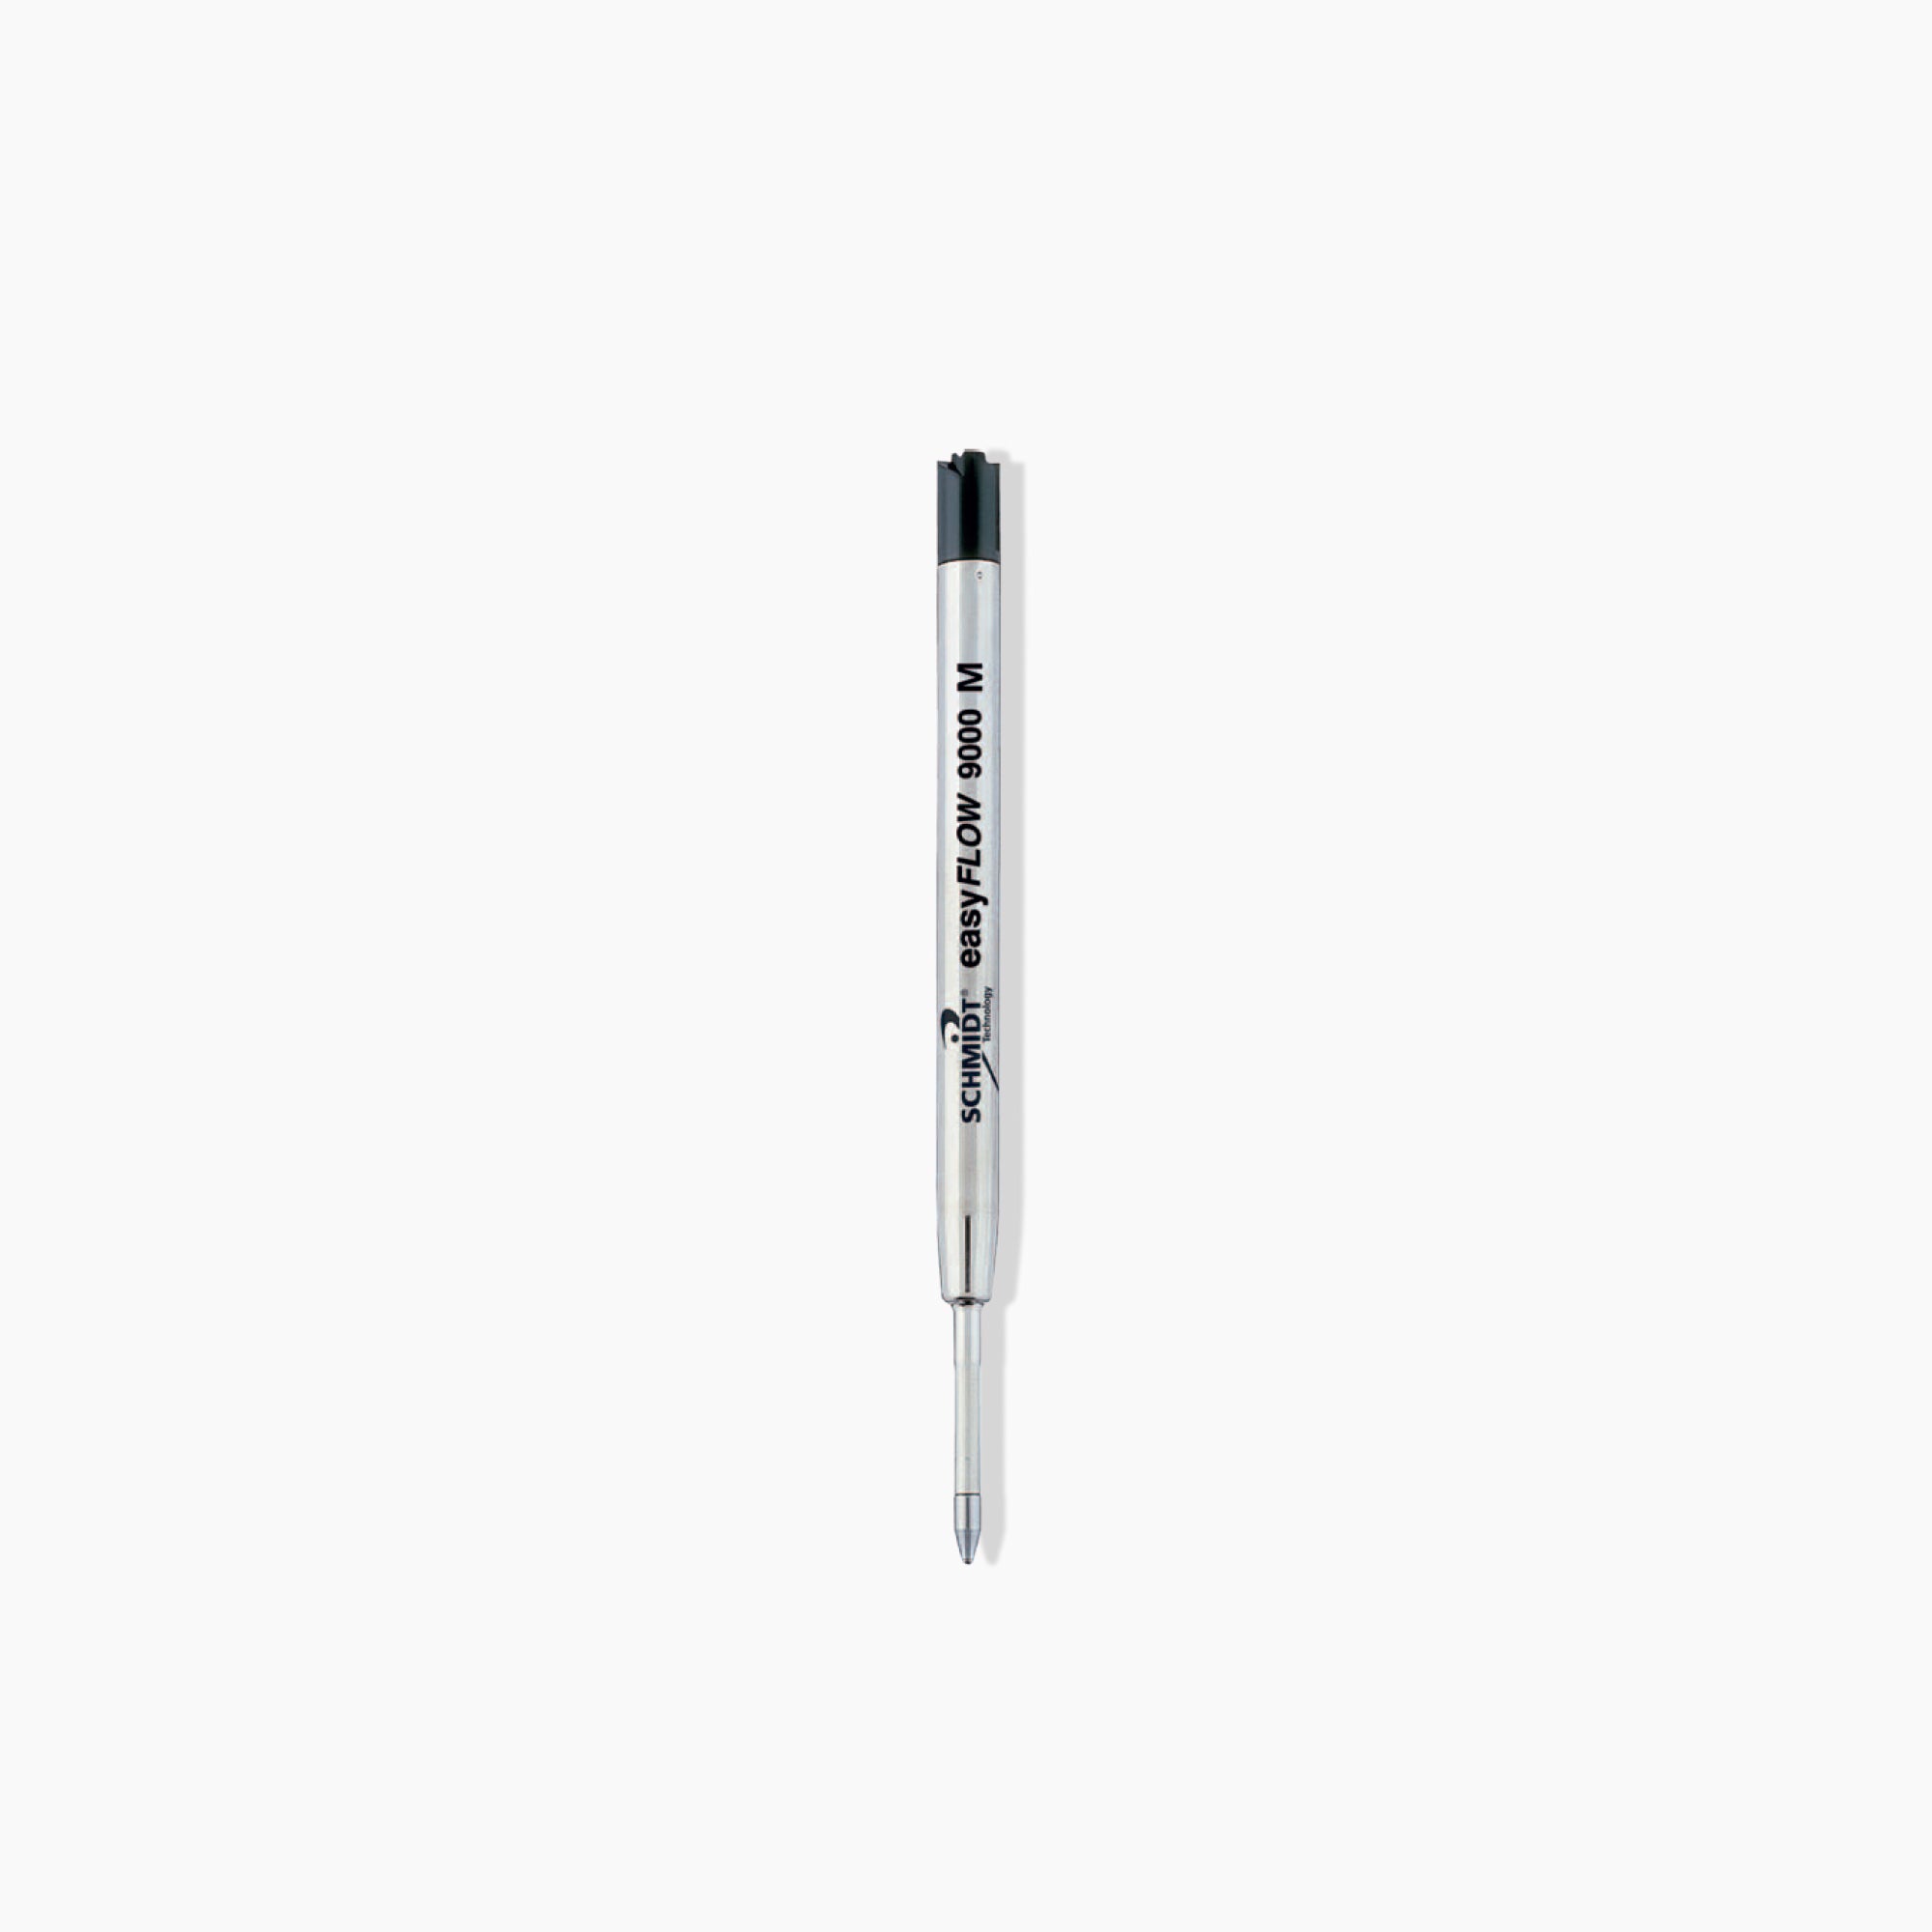 Schmidt easyFLOW 9000 Parker G2 style pen refill